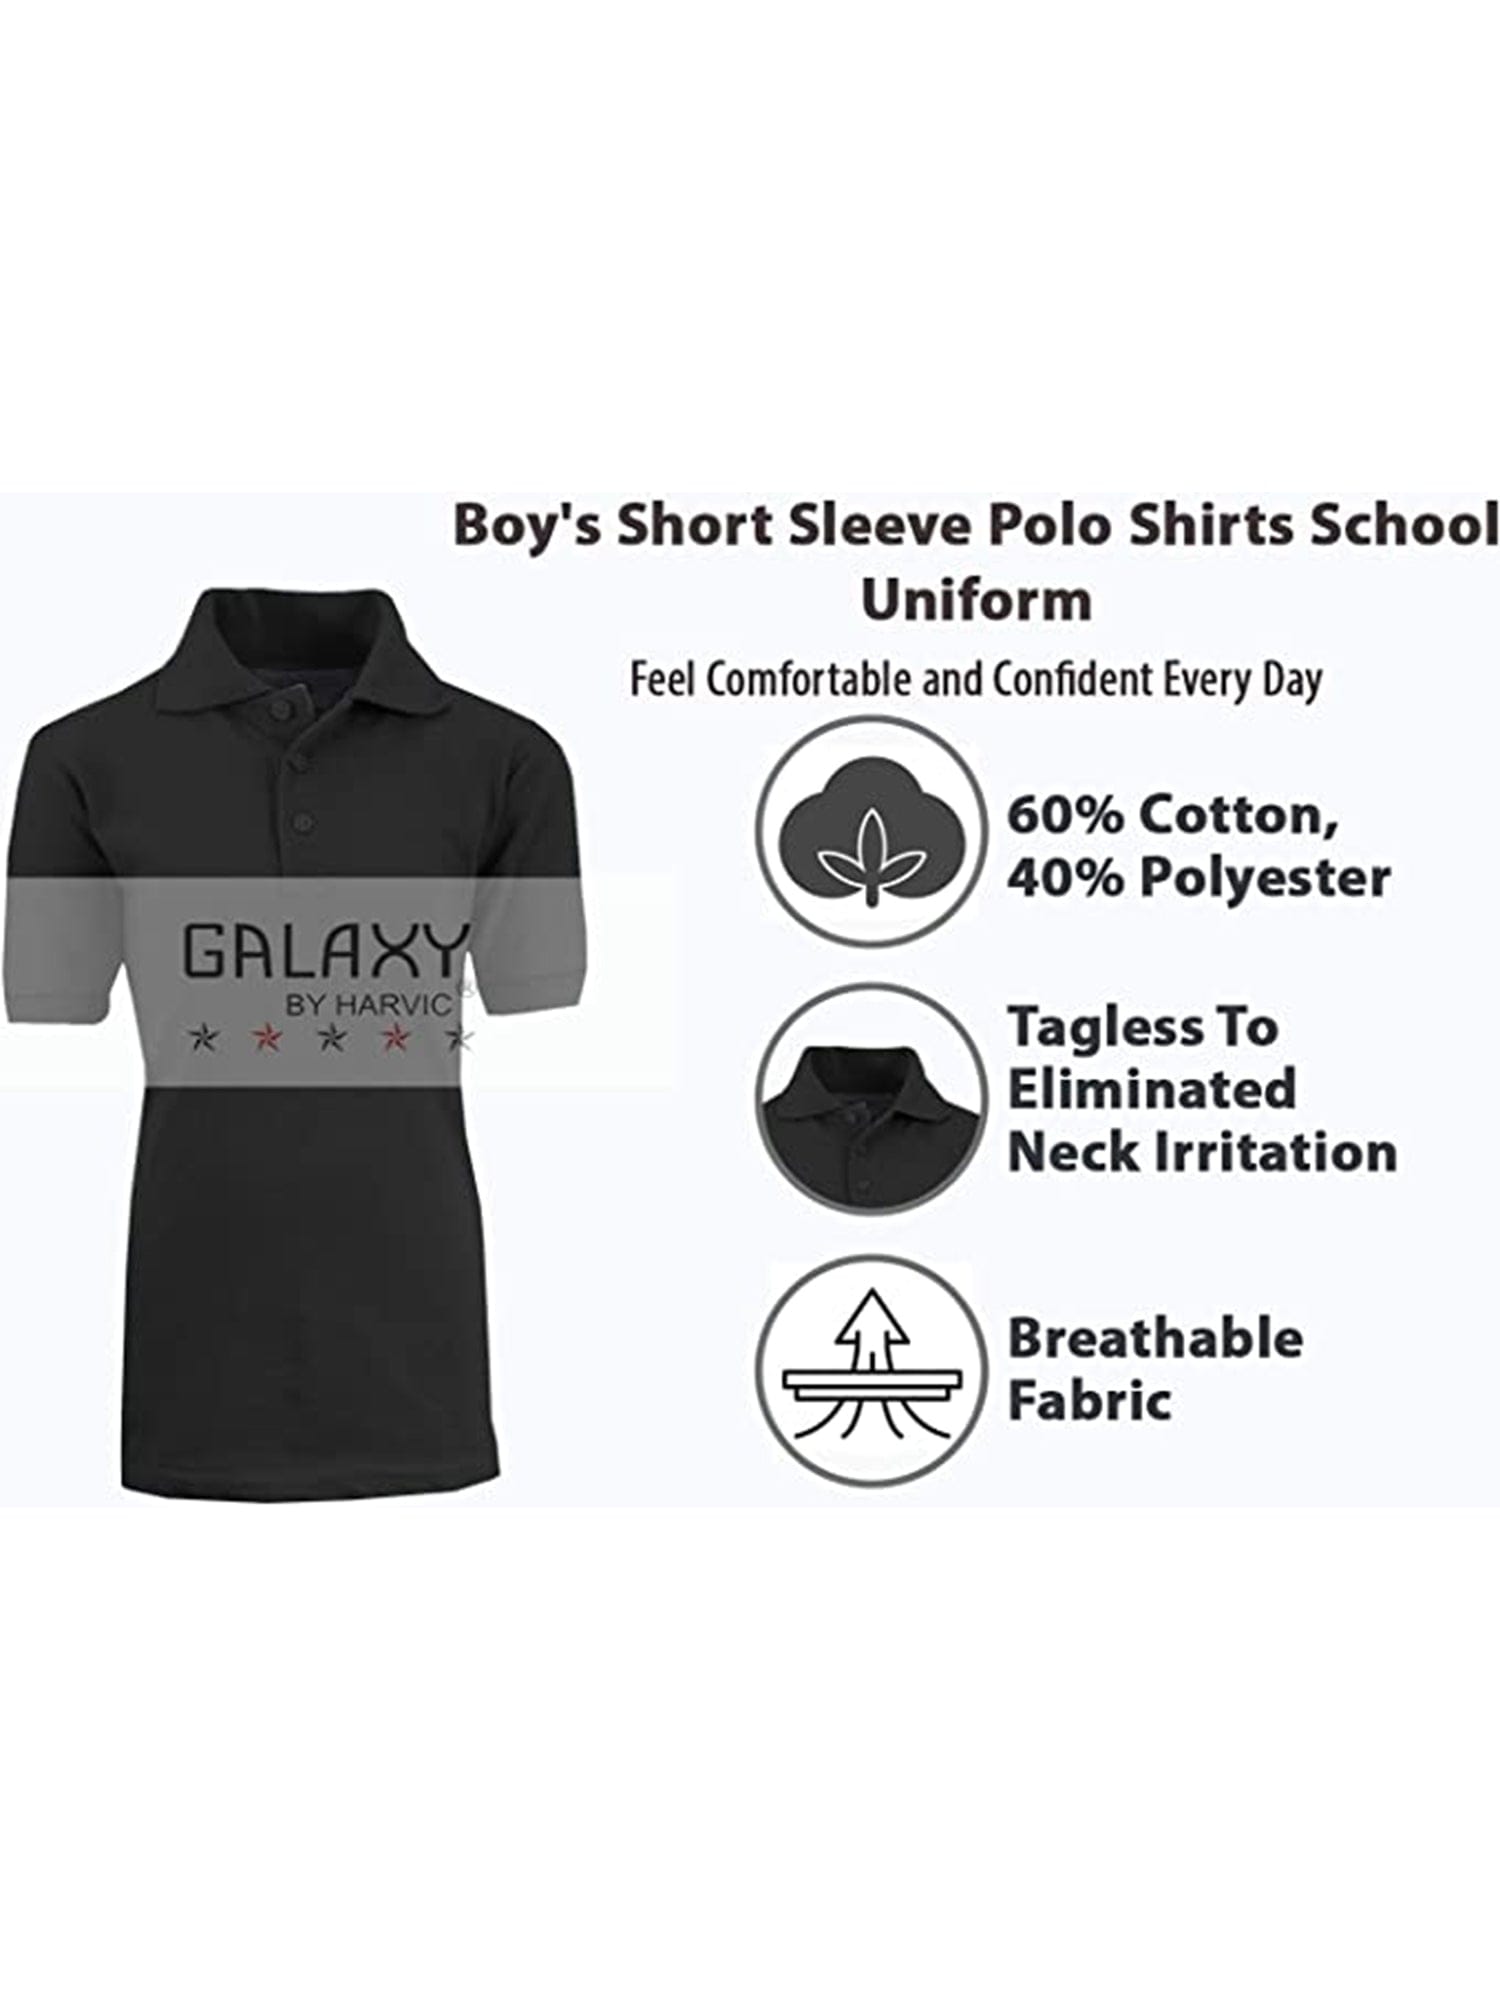 Galaxy Uniform Boys' Long-sleeved Pique Polo Shirt - Blue, 20